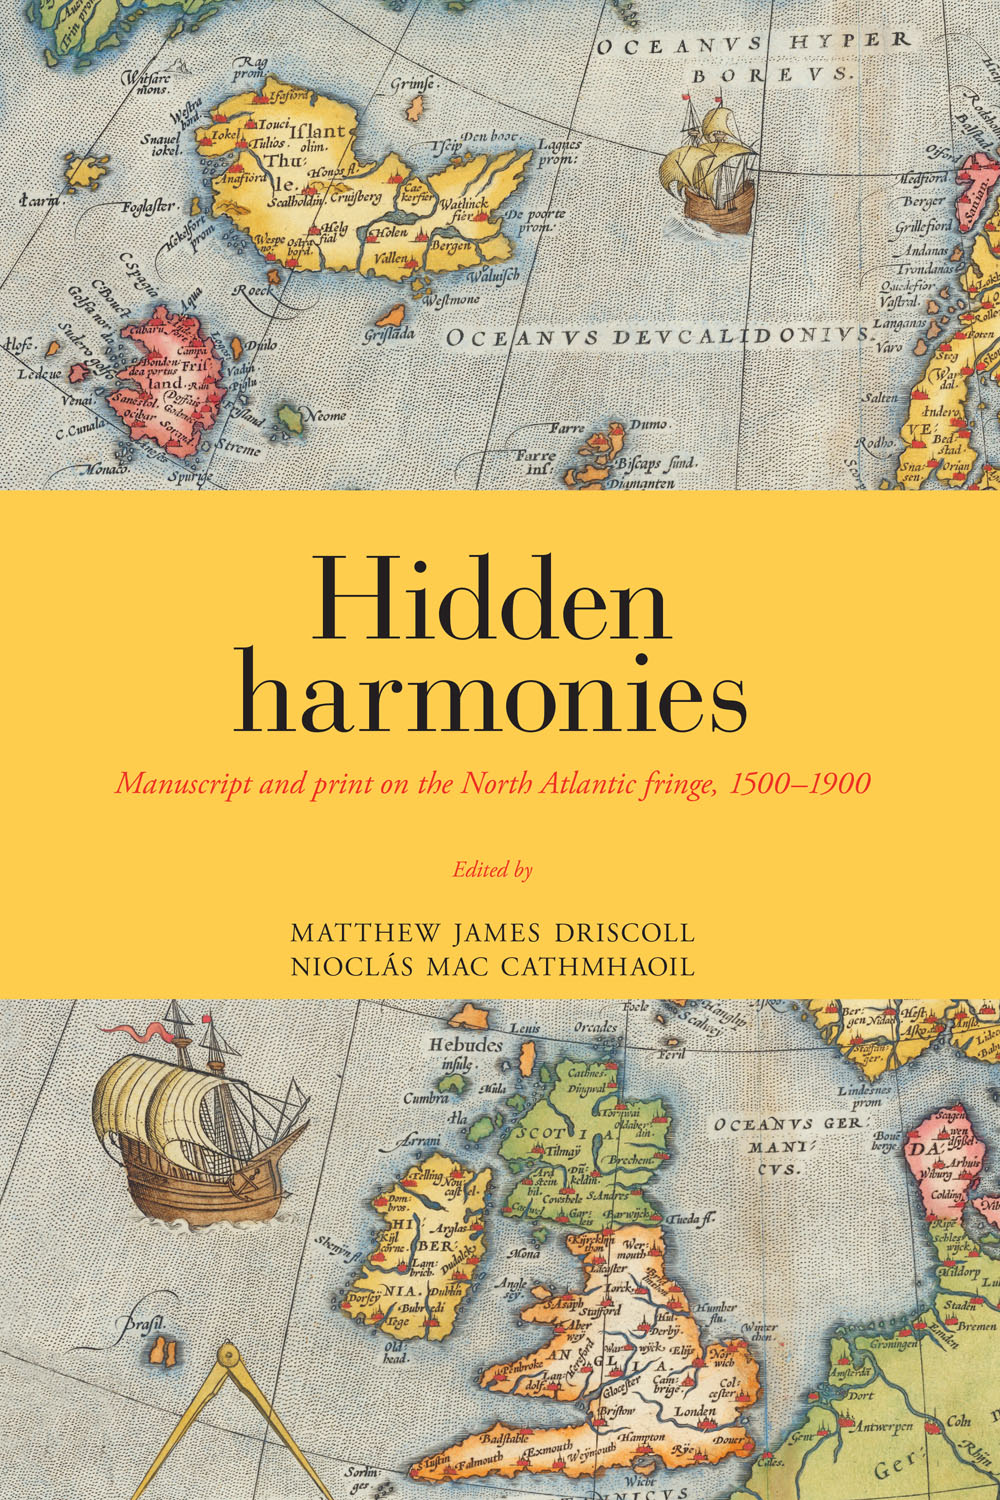 Hidden harmonies: Manuscript and print on the North Atlantic fringe, 1500-1900 (Copenhagen: Museum Tusculanum Press, 2021)